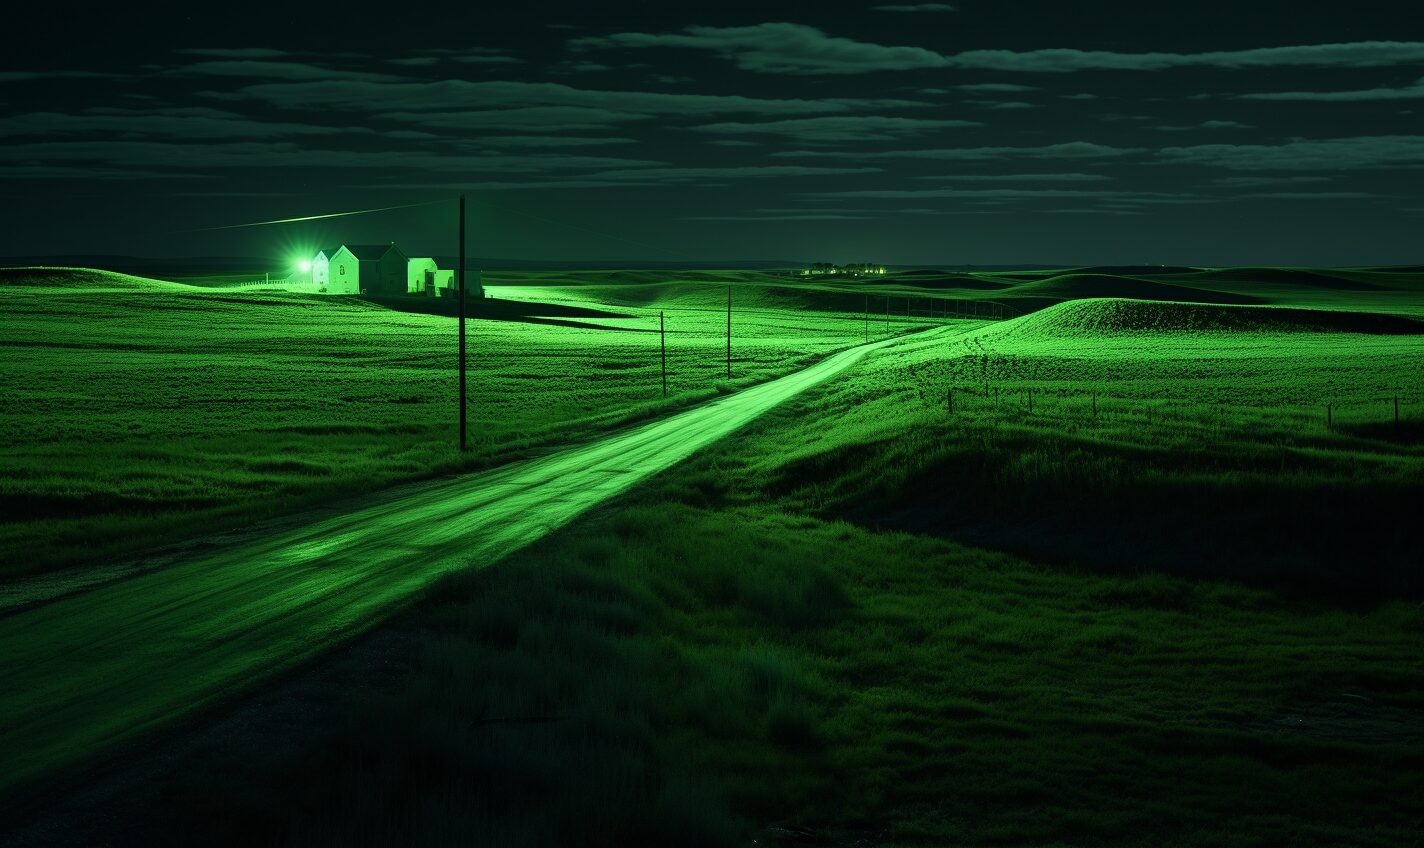 rapid city, south dakota in a black and neon green glow